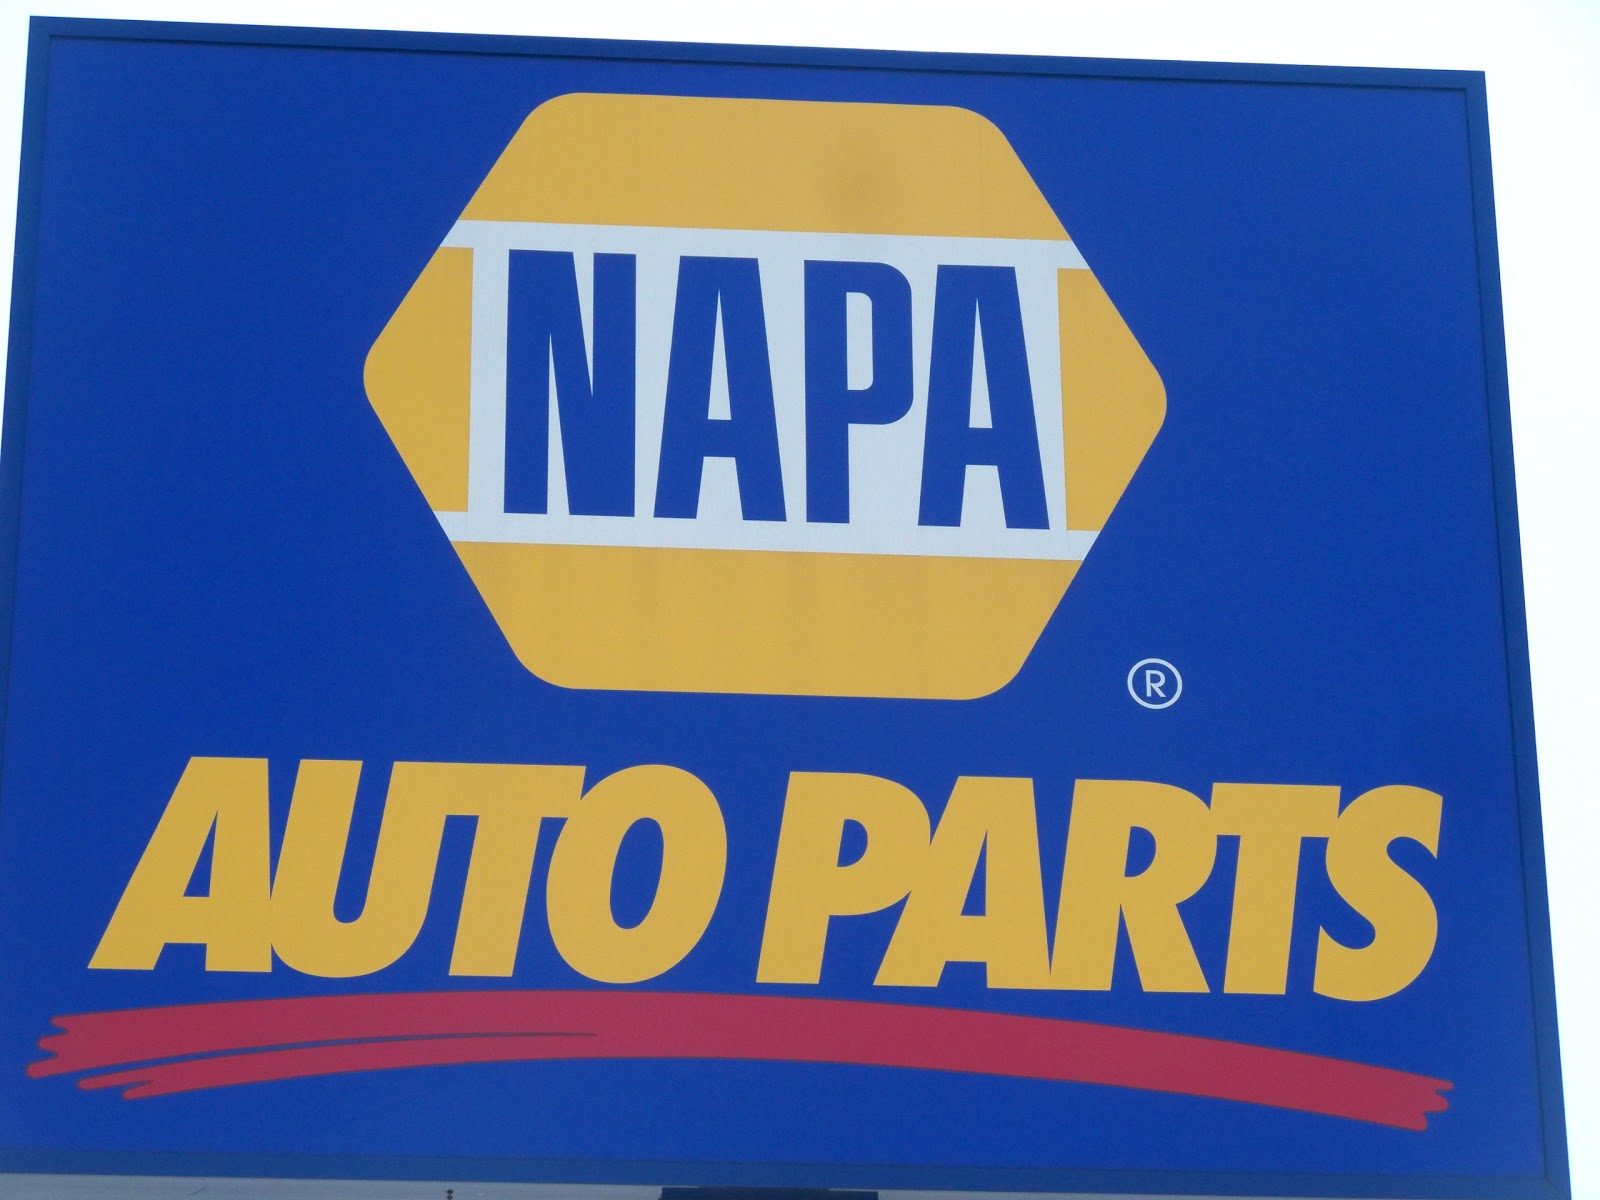 Napa Auto Parts Buy Car Truck Online Autos Post.